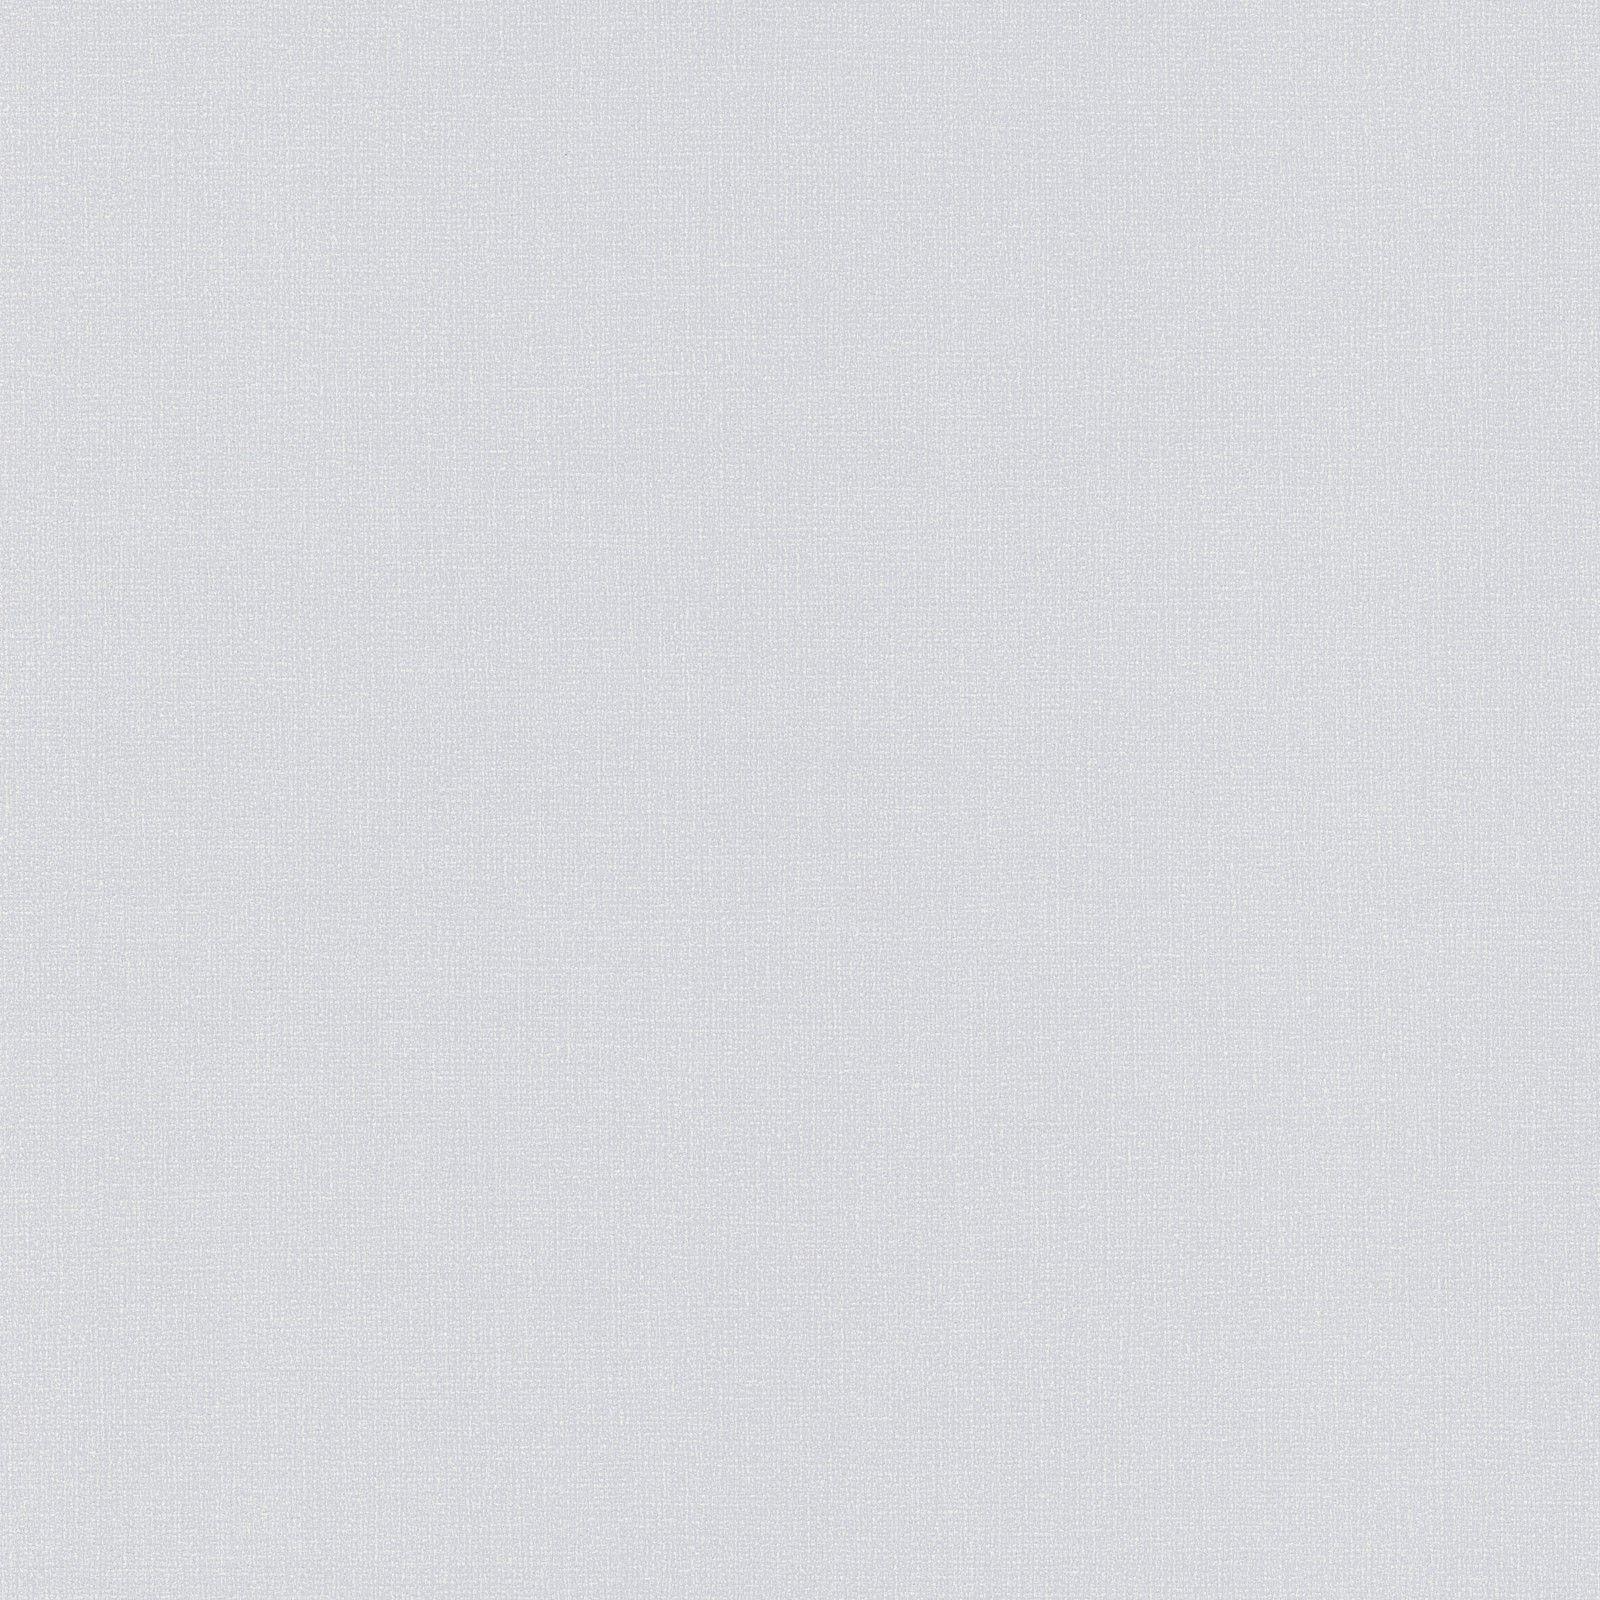 White Grey Hexagonal Relief Surface - Vertical Background Stock  Illustration - Illustration of hexagon, blue: 63027517